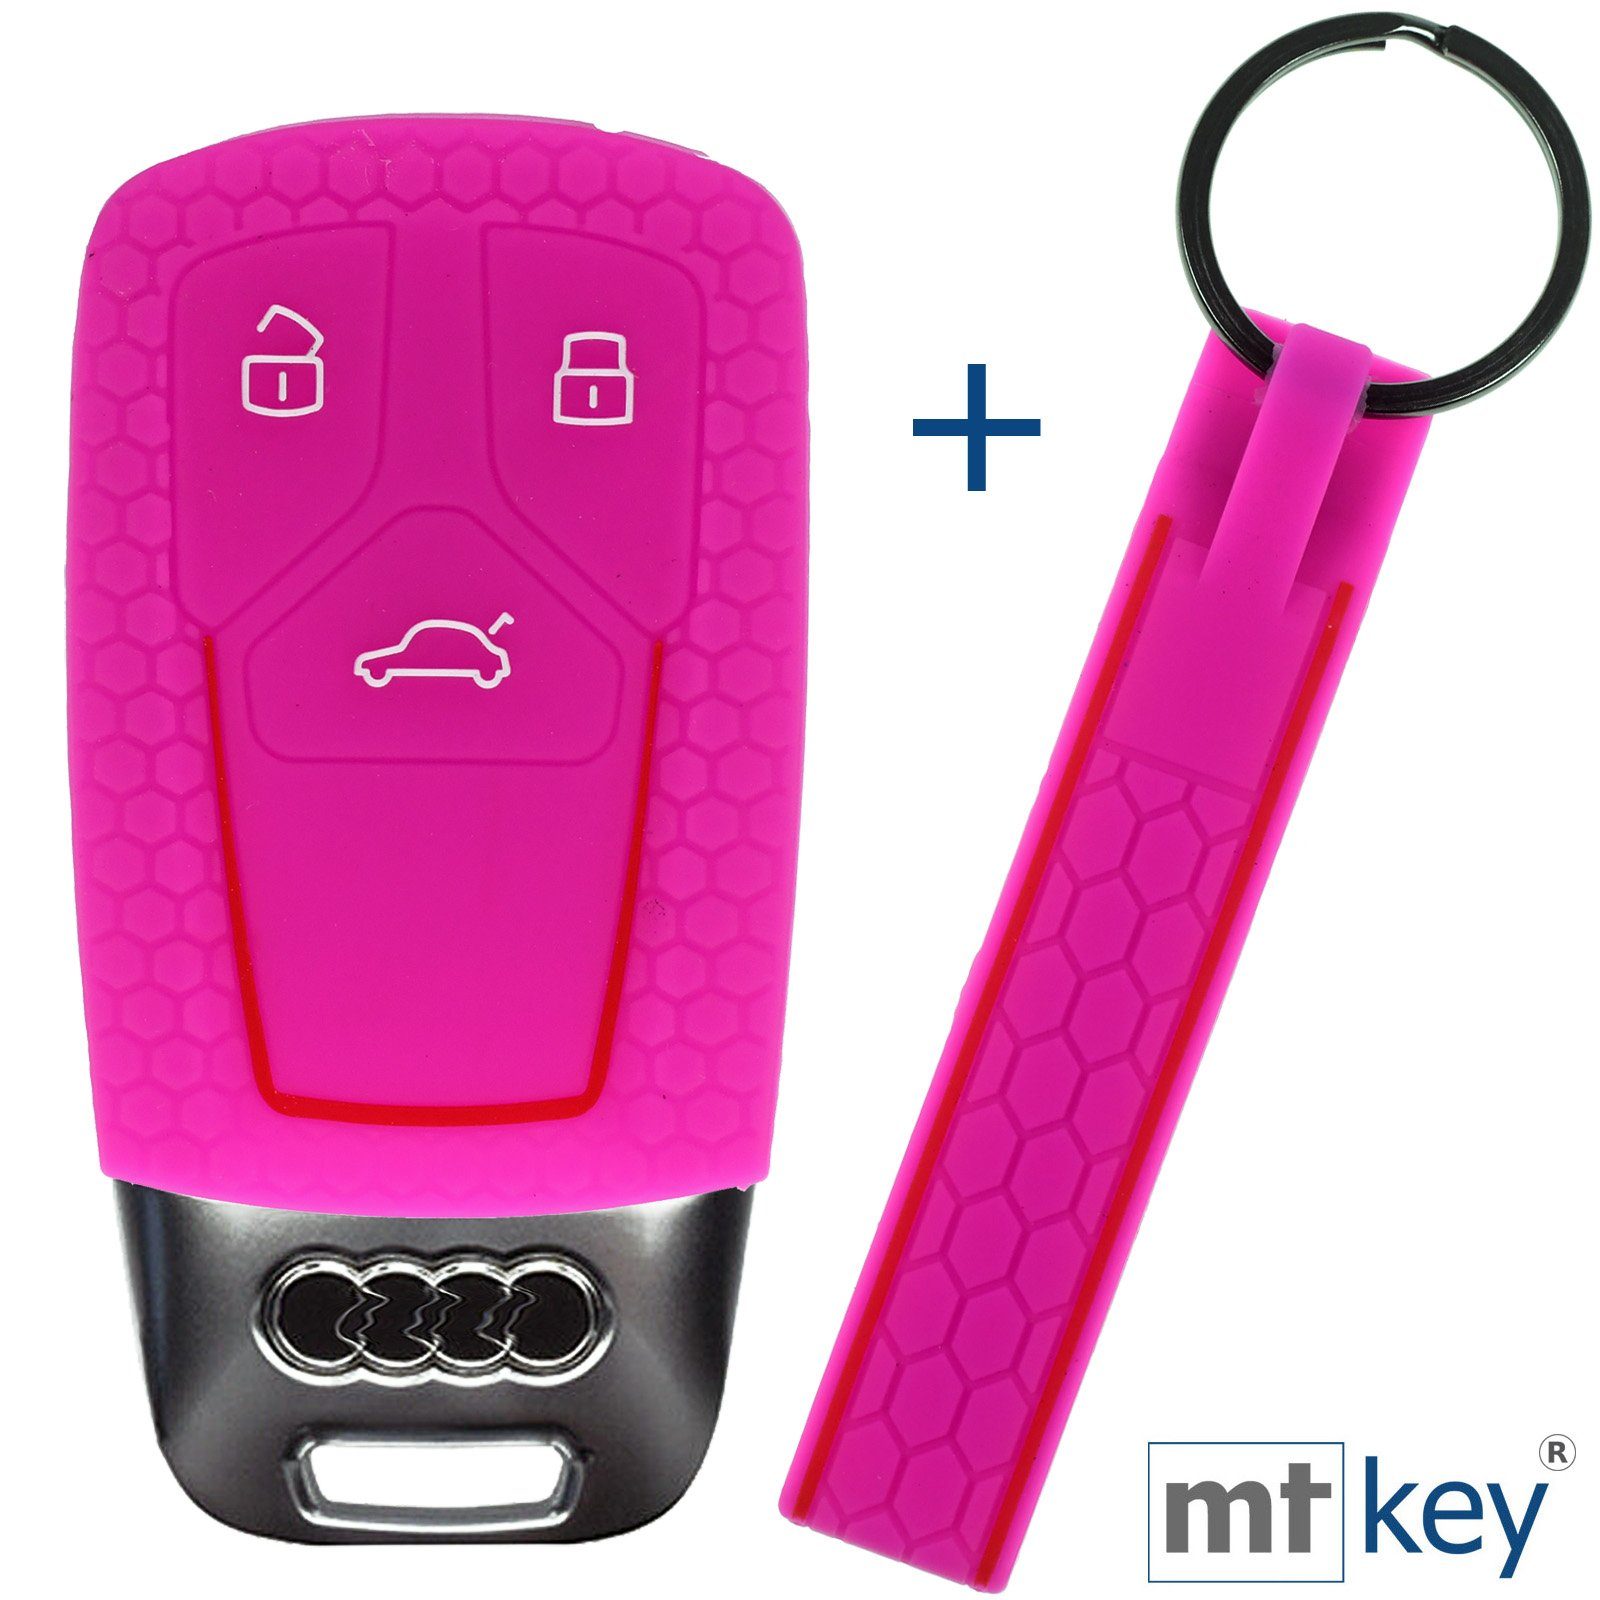 A8 SMARTKEY Schutzhülle KEYLESS Q2 A4 Silikon Q5 Wabe + im Audi A6 Autoschlüssel für Schlüsselband, Tasten Schlüsseltasche Q8 mt-key A7 Design 3 TT Q7 Pink A5